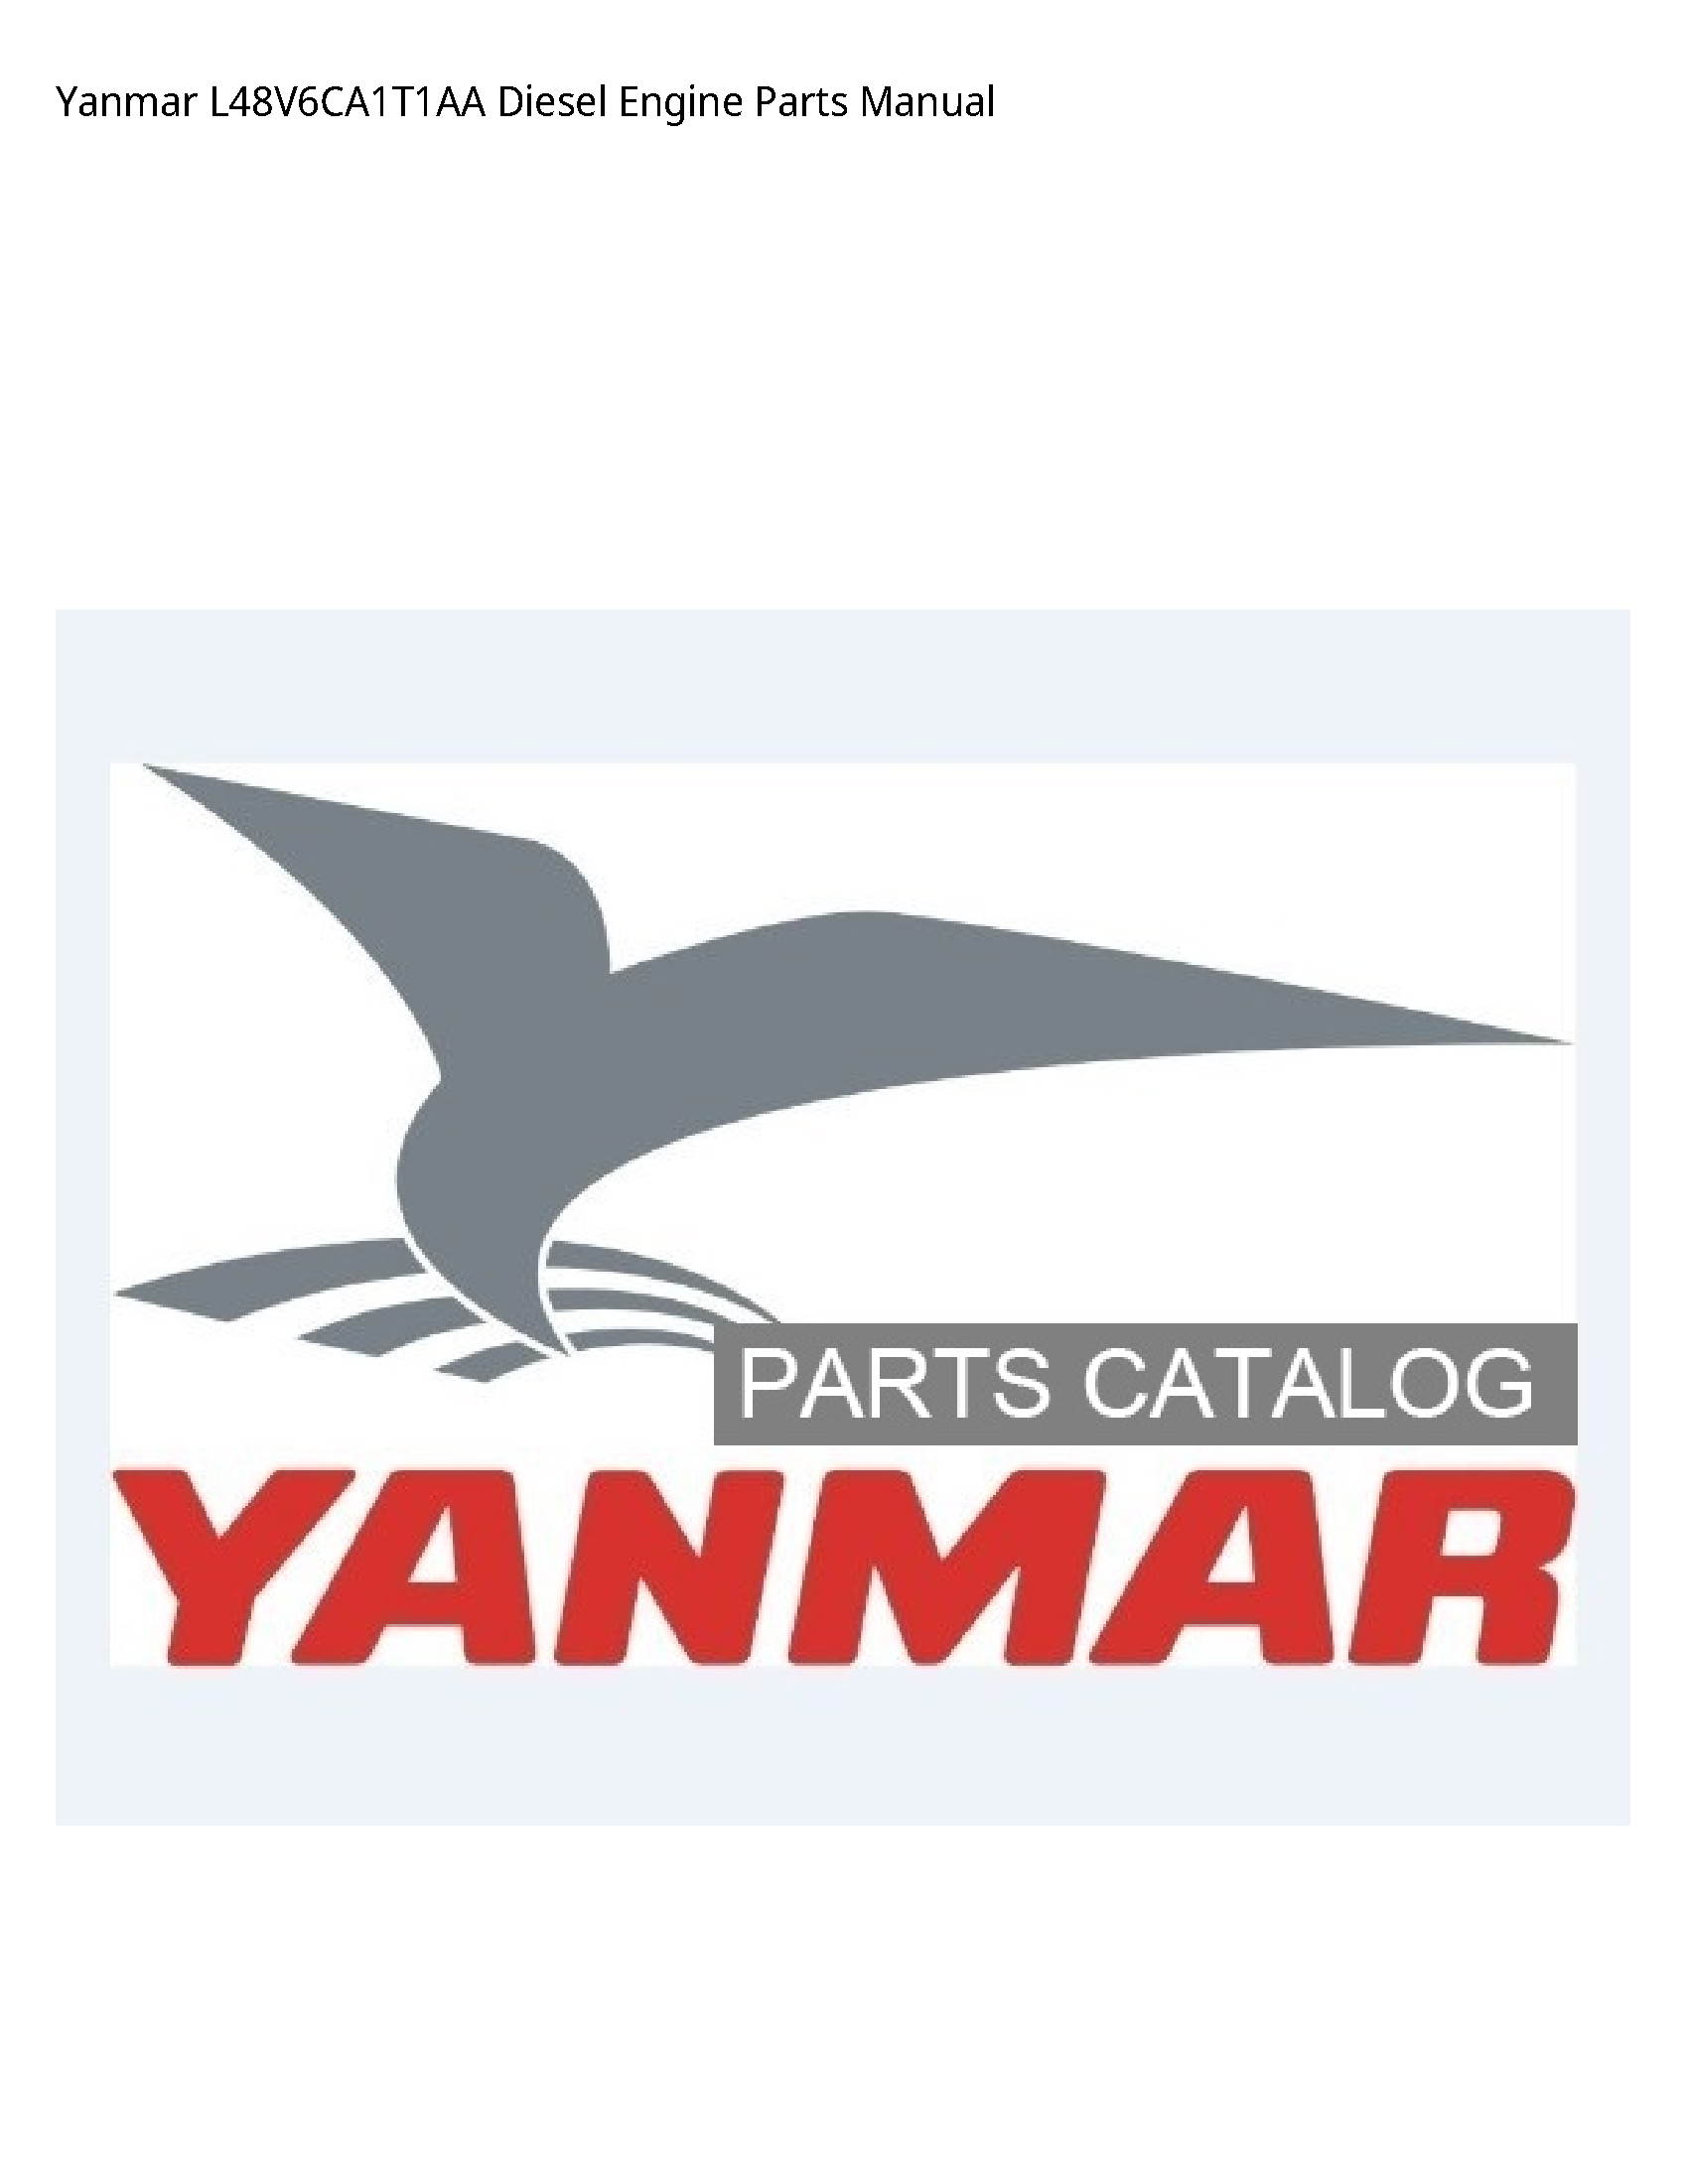 Yanmar L48V6CA1T1AA Diesel Engine Parts manual